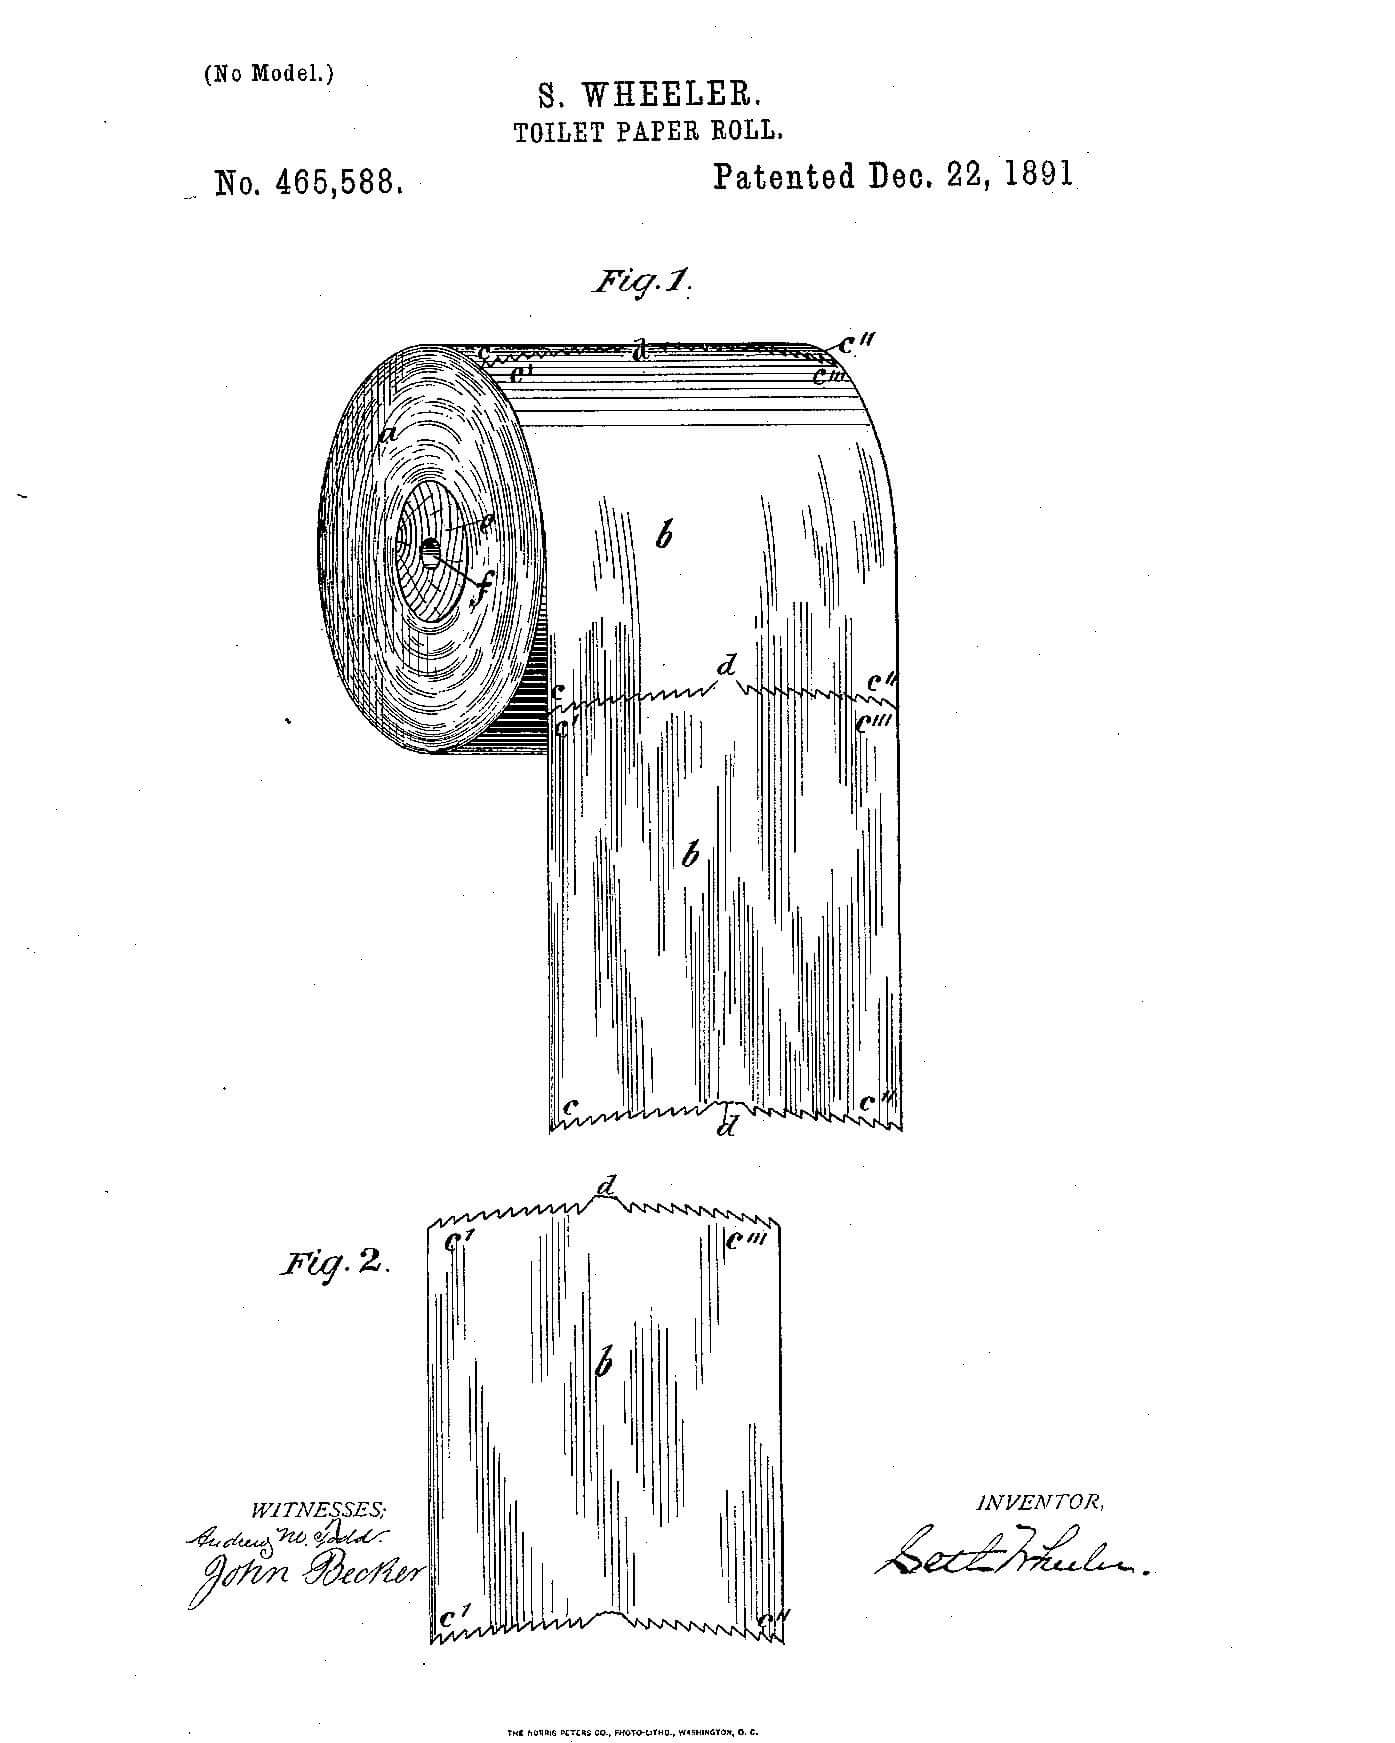 toilet_paper_patent_1891.jpg